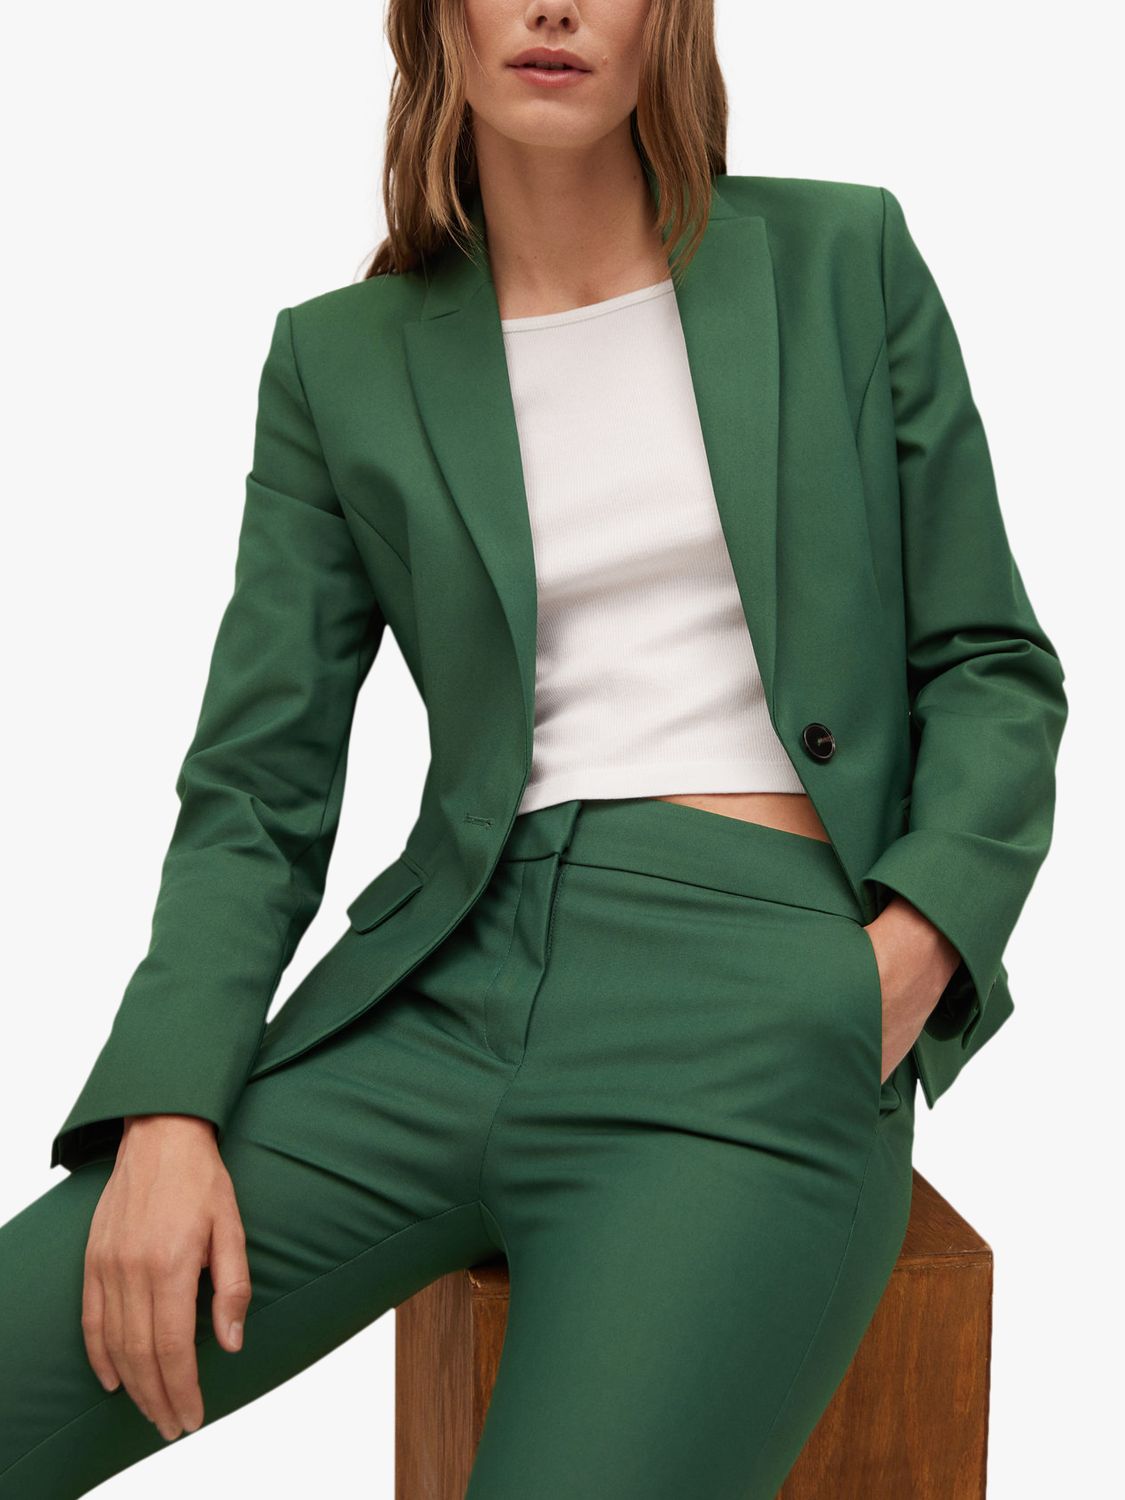 Mango Slim Fit Suit Trousers, Bottle Green at John Lewis & Partners